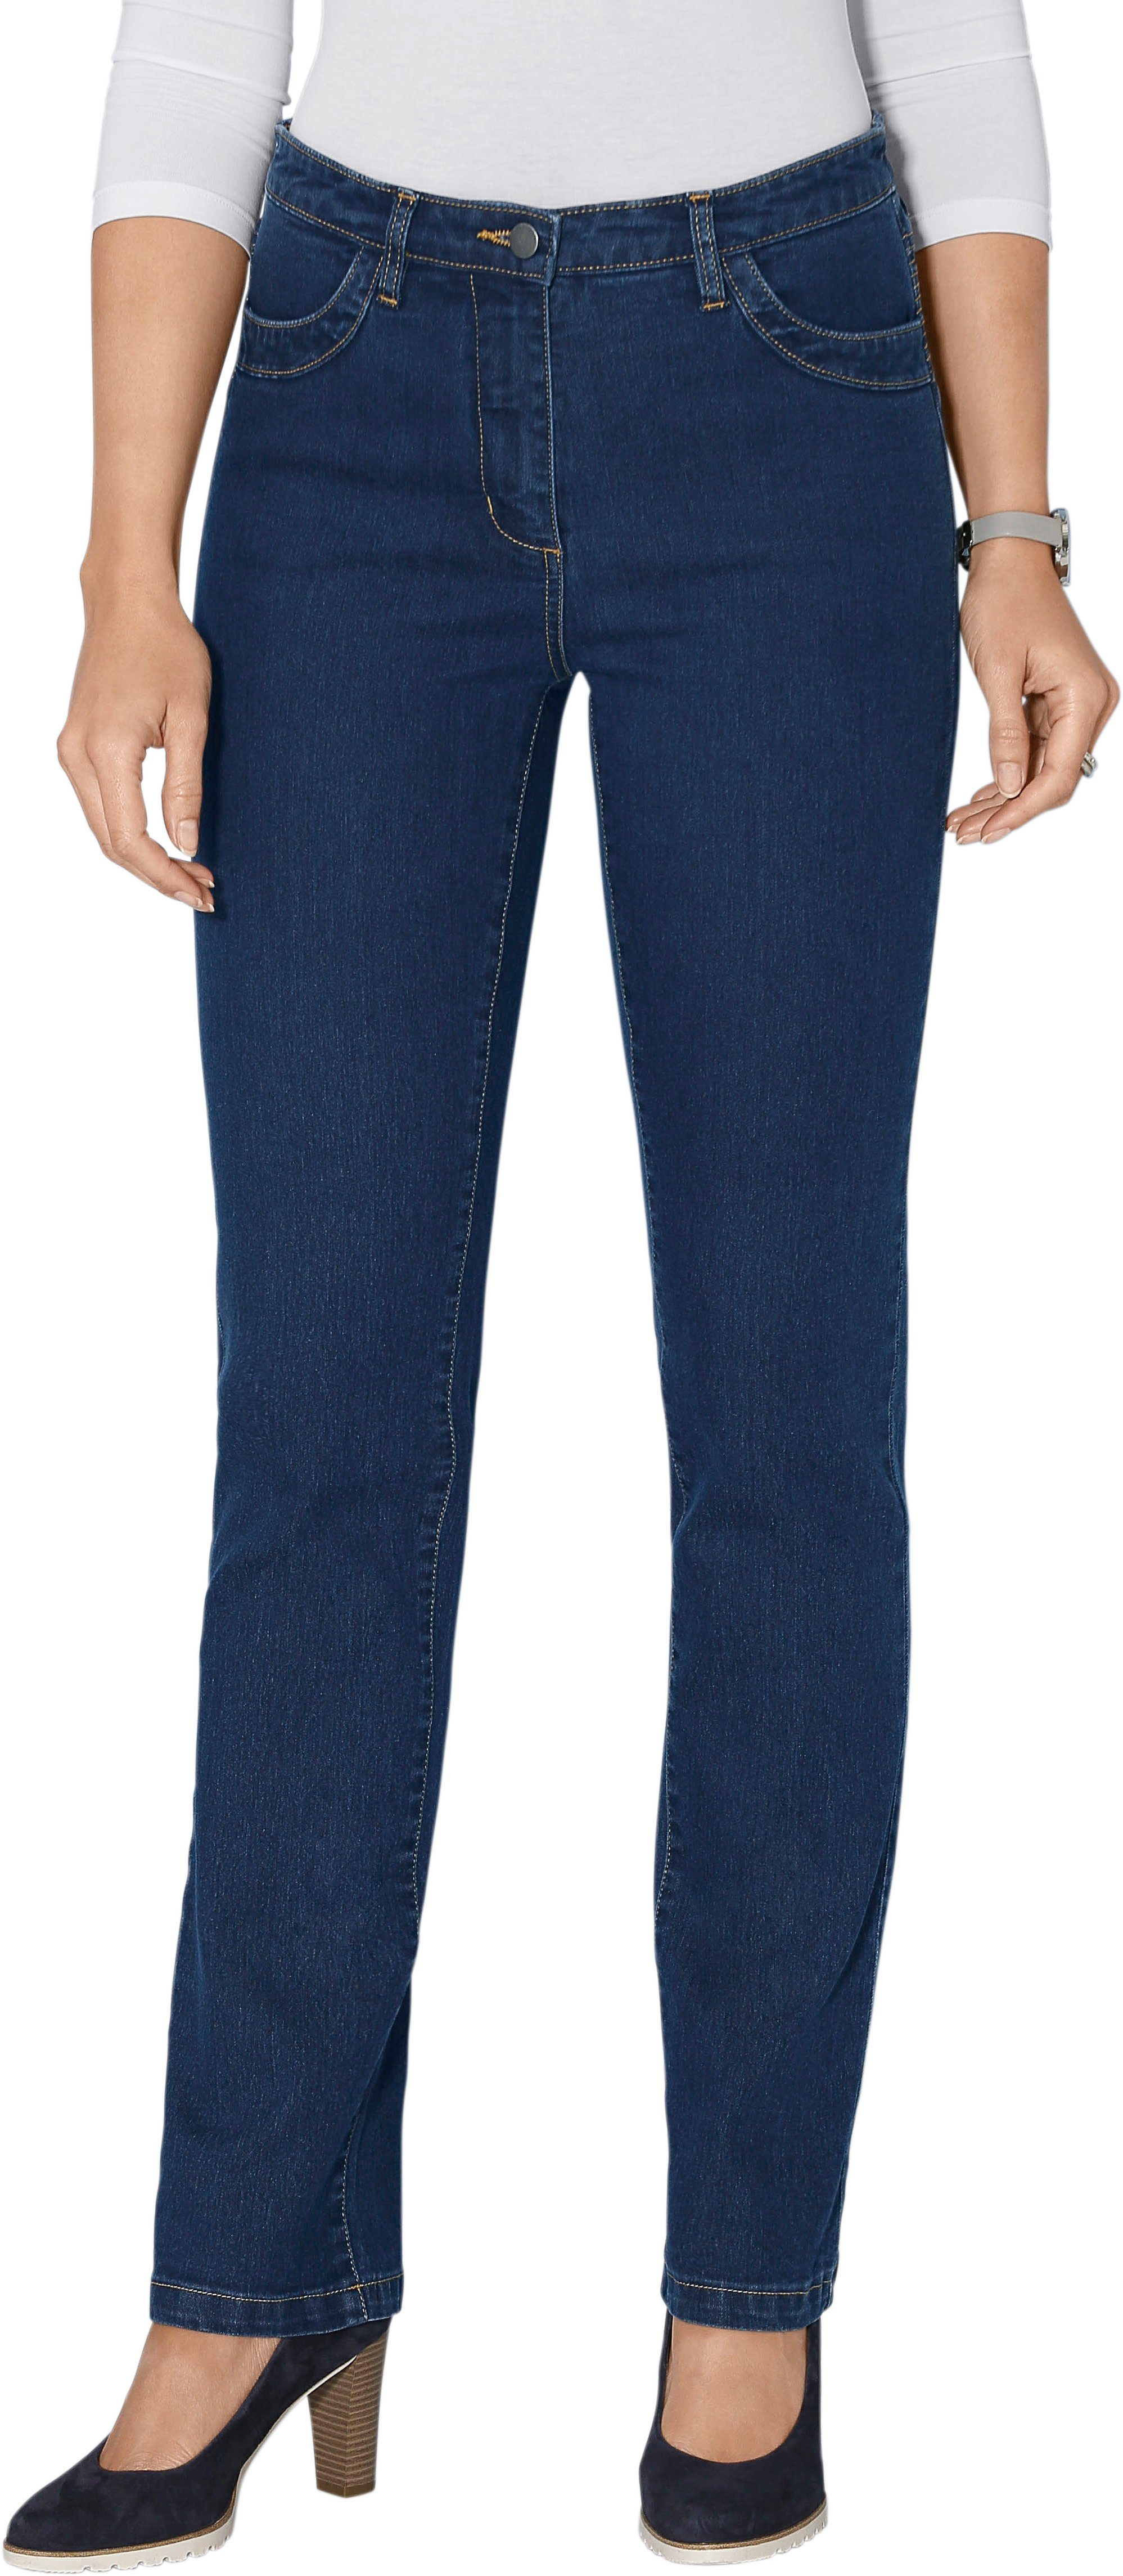 Classic Basics NU 15% KORTING: Classic Basics jeans in stretchkwaliteit